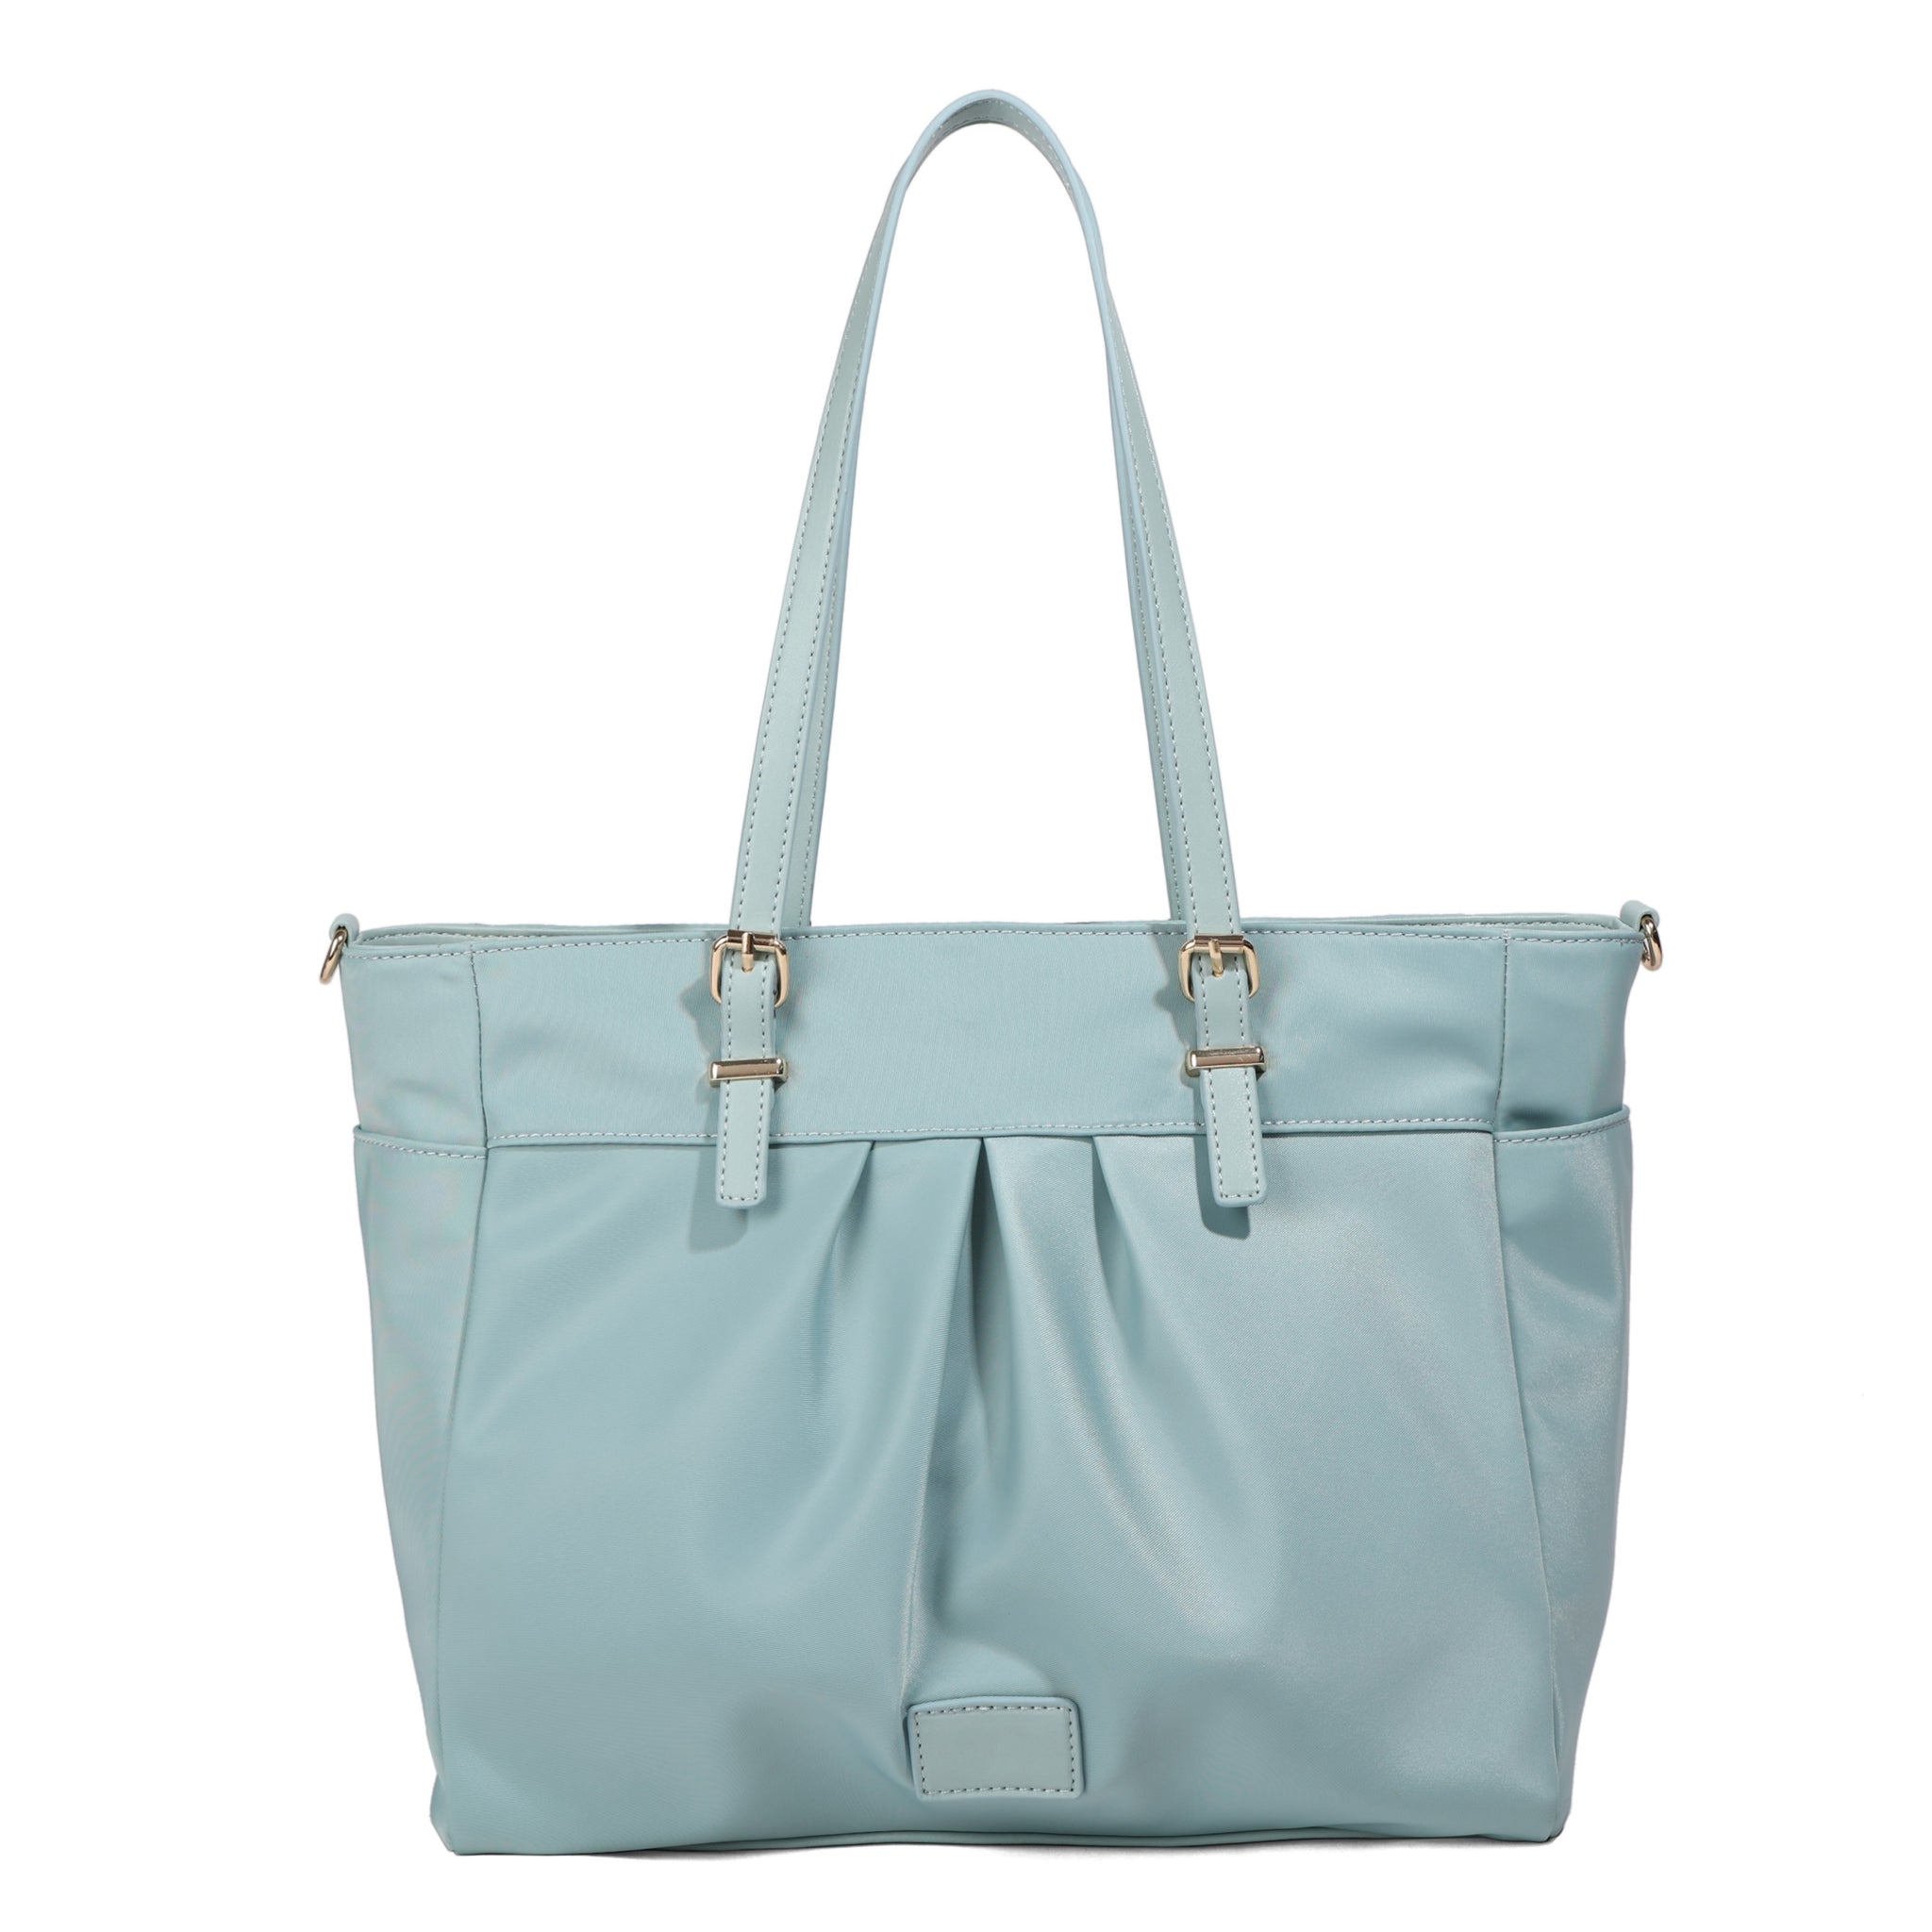 CQ1102 stylish terrace tote handbag nylon shoulder hand bag